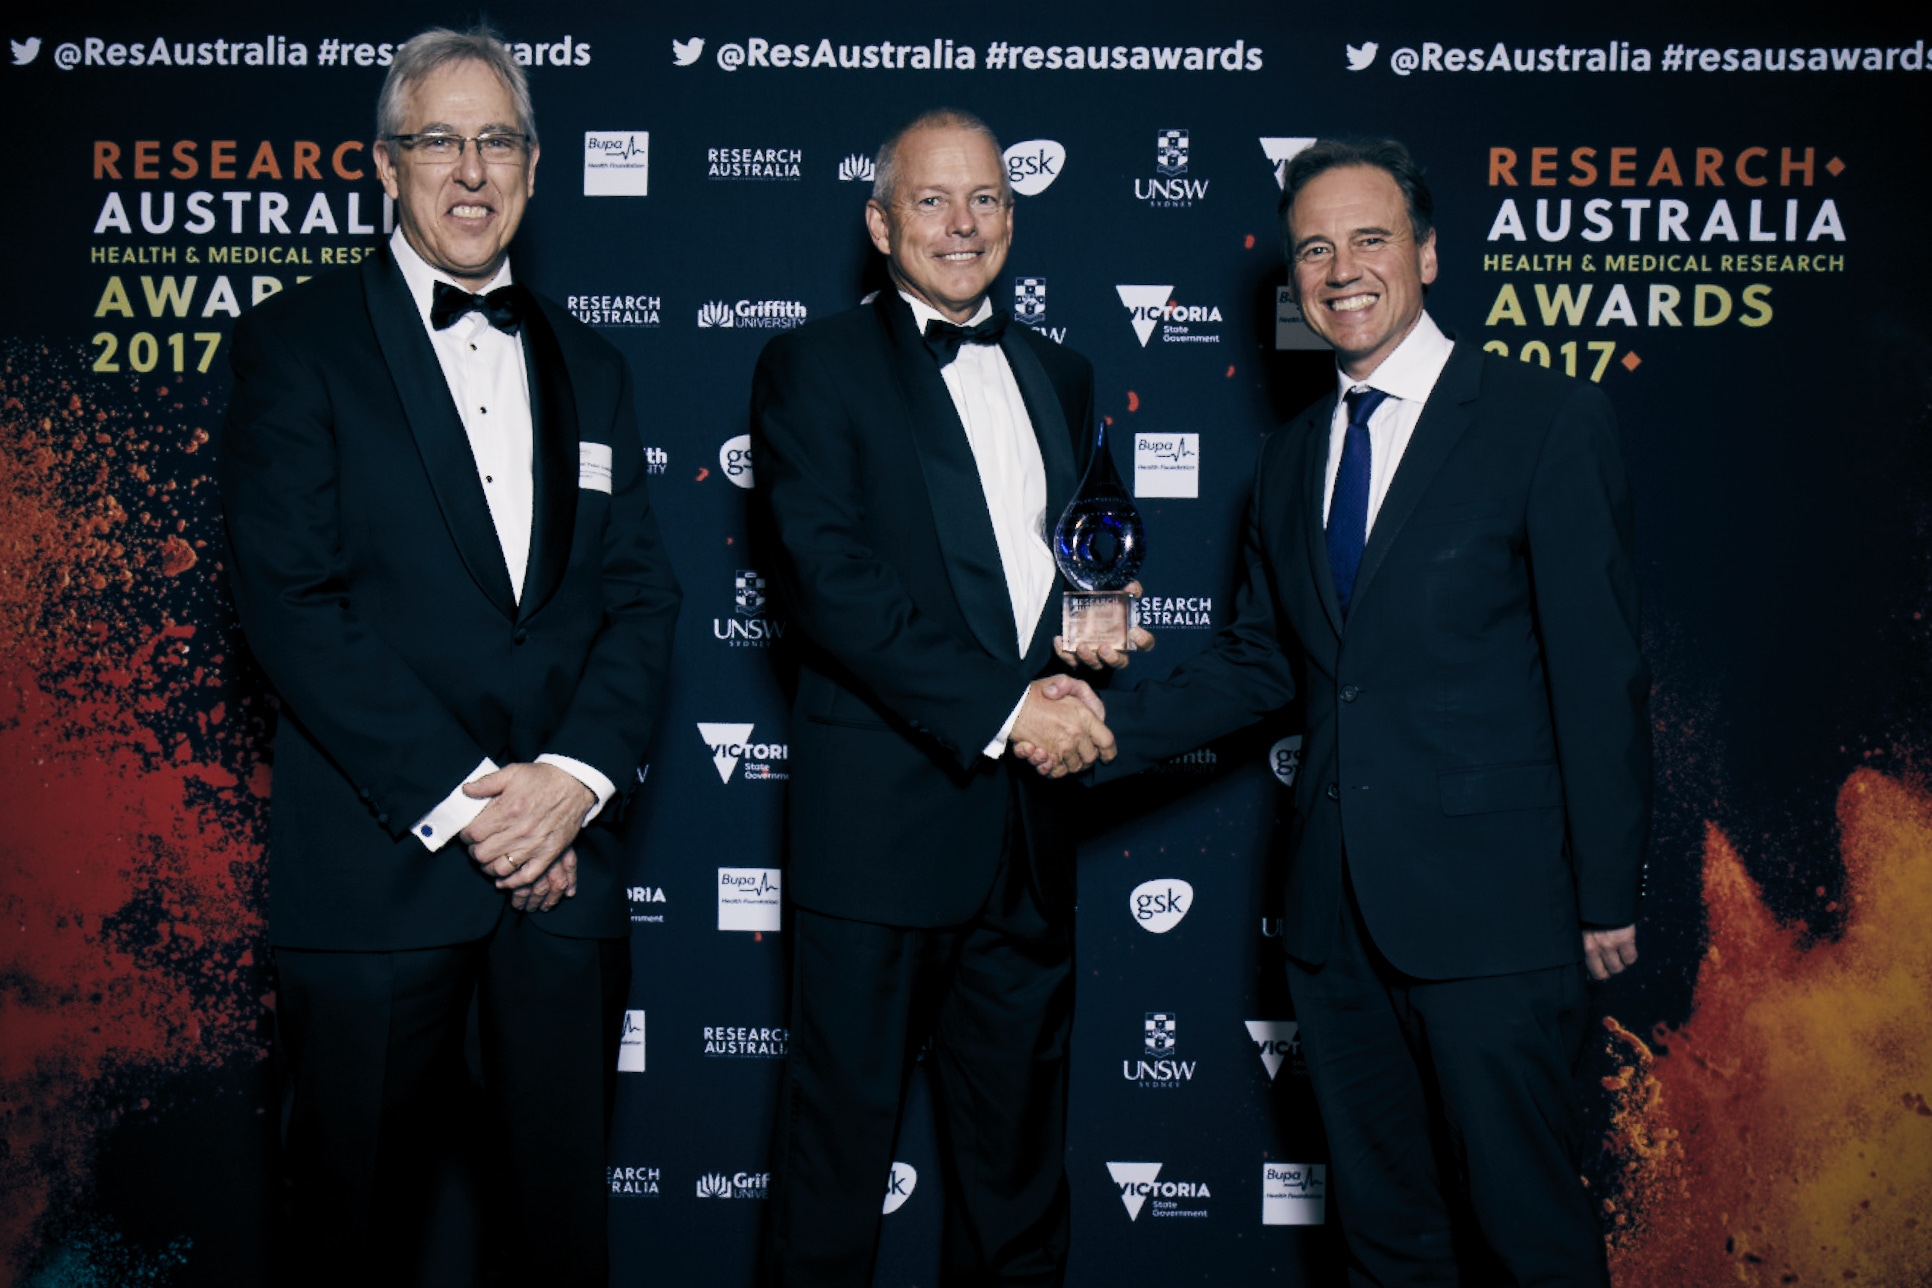 2017 Great Australian Philanthropy Award Winner: Andrew Forrest AO and Nicola Forrest